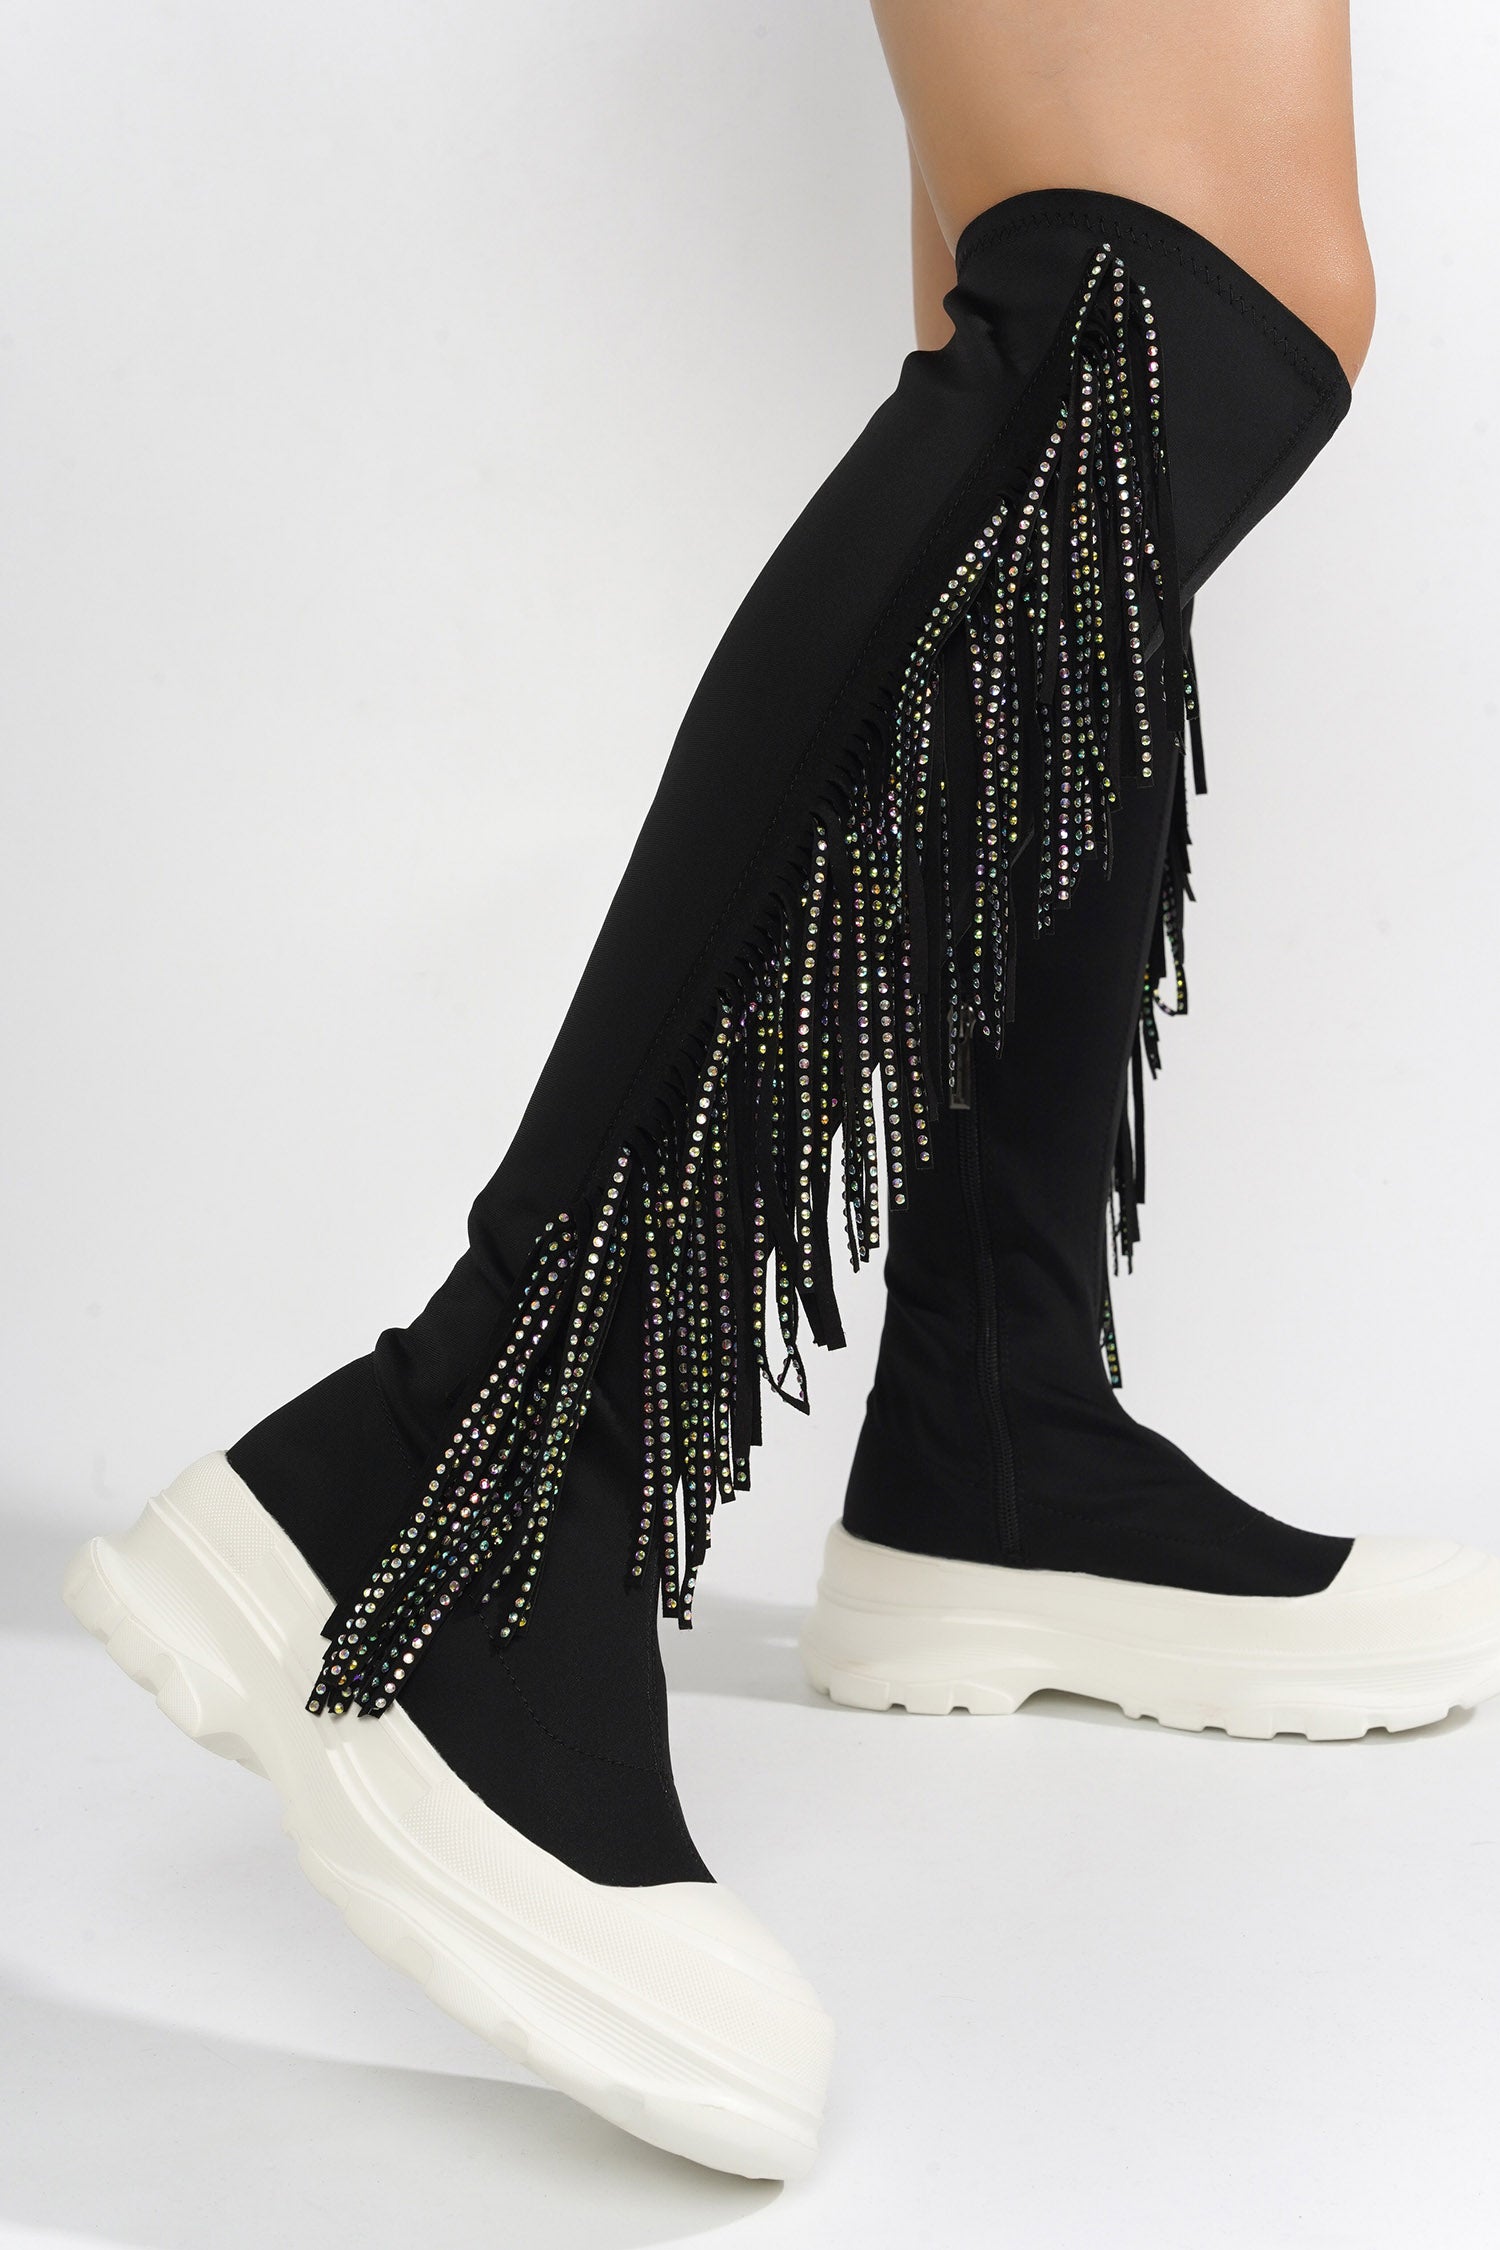 UrbanOG - Aretha Fringe Rhinestone Thigh High Boots - BOOTS